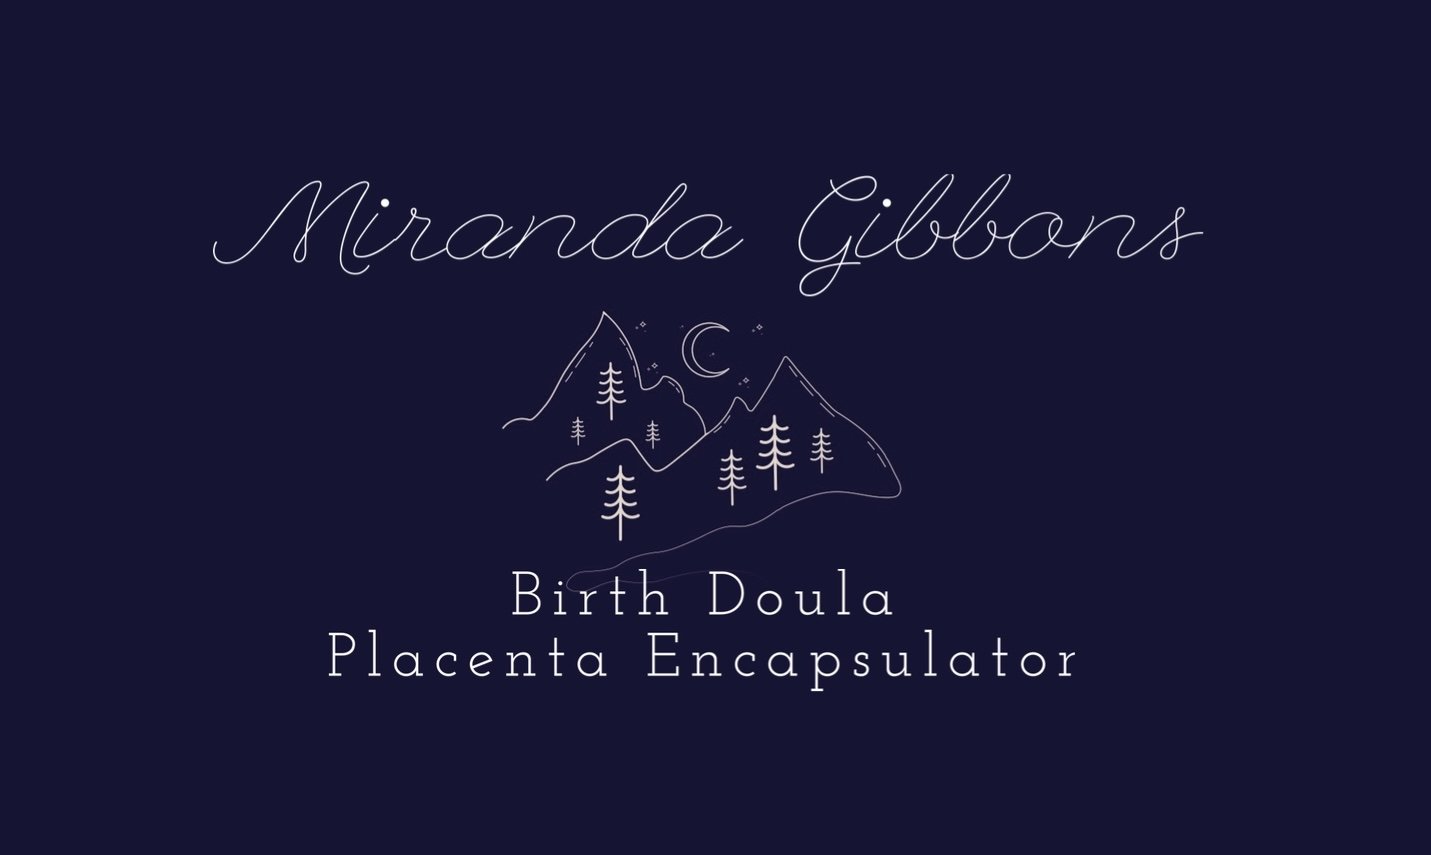 Birth Doula &amp; Placenta Encapsulation Services